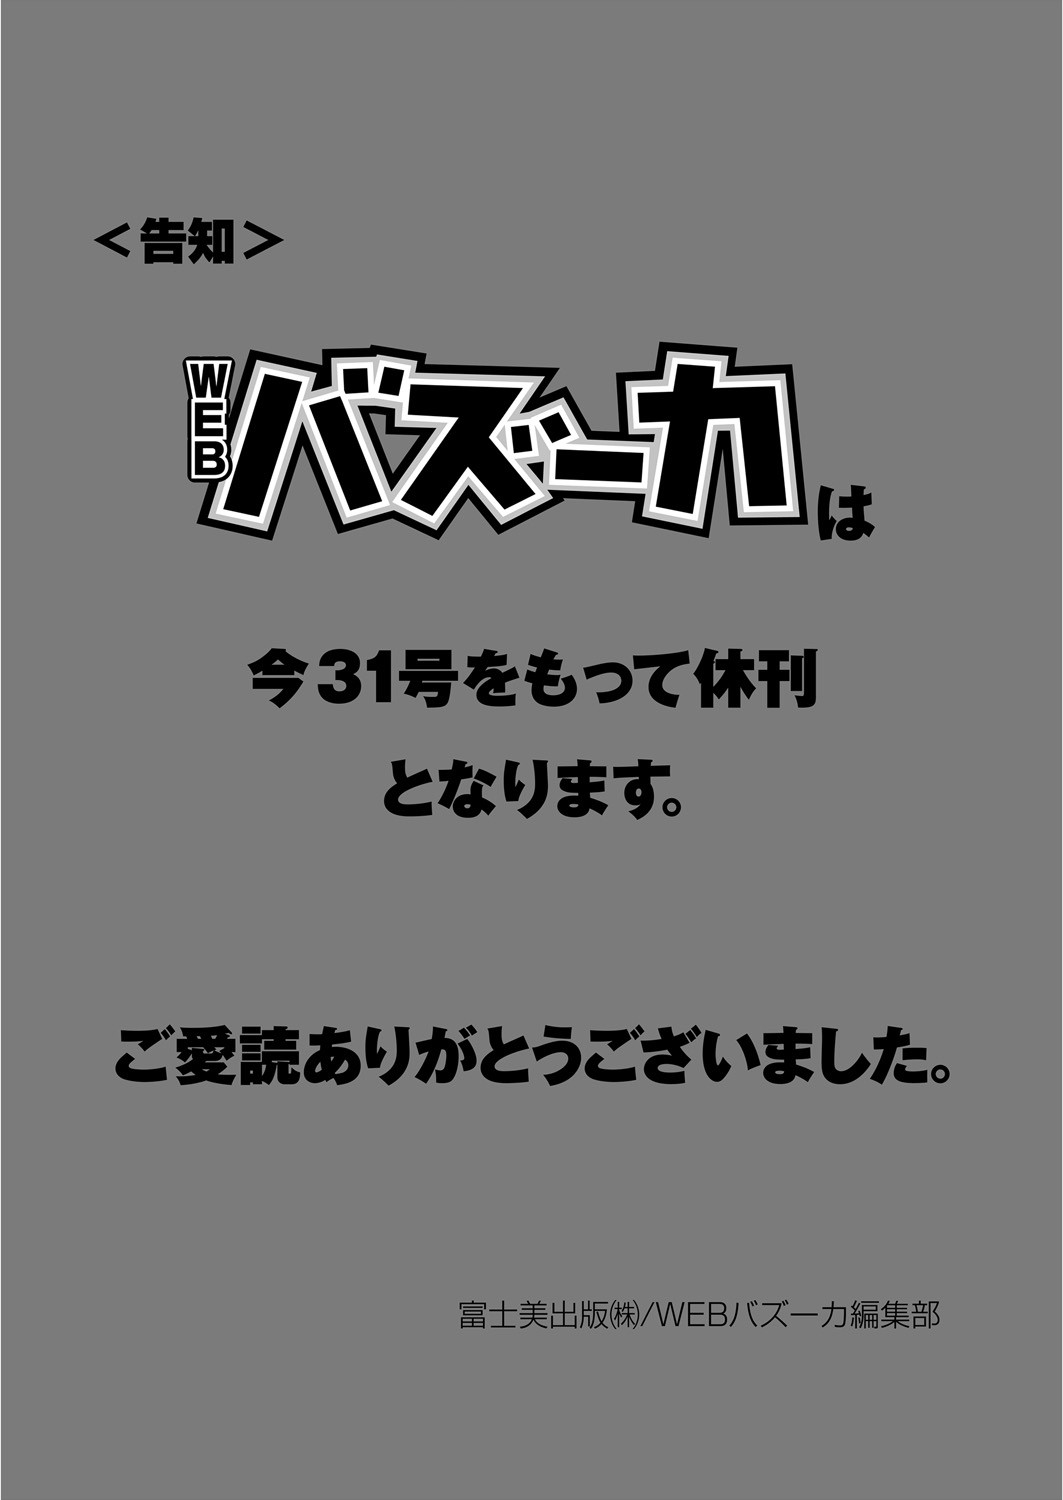 WEB バズーカ Vol.31